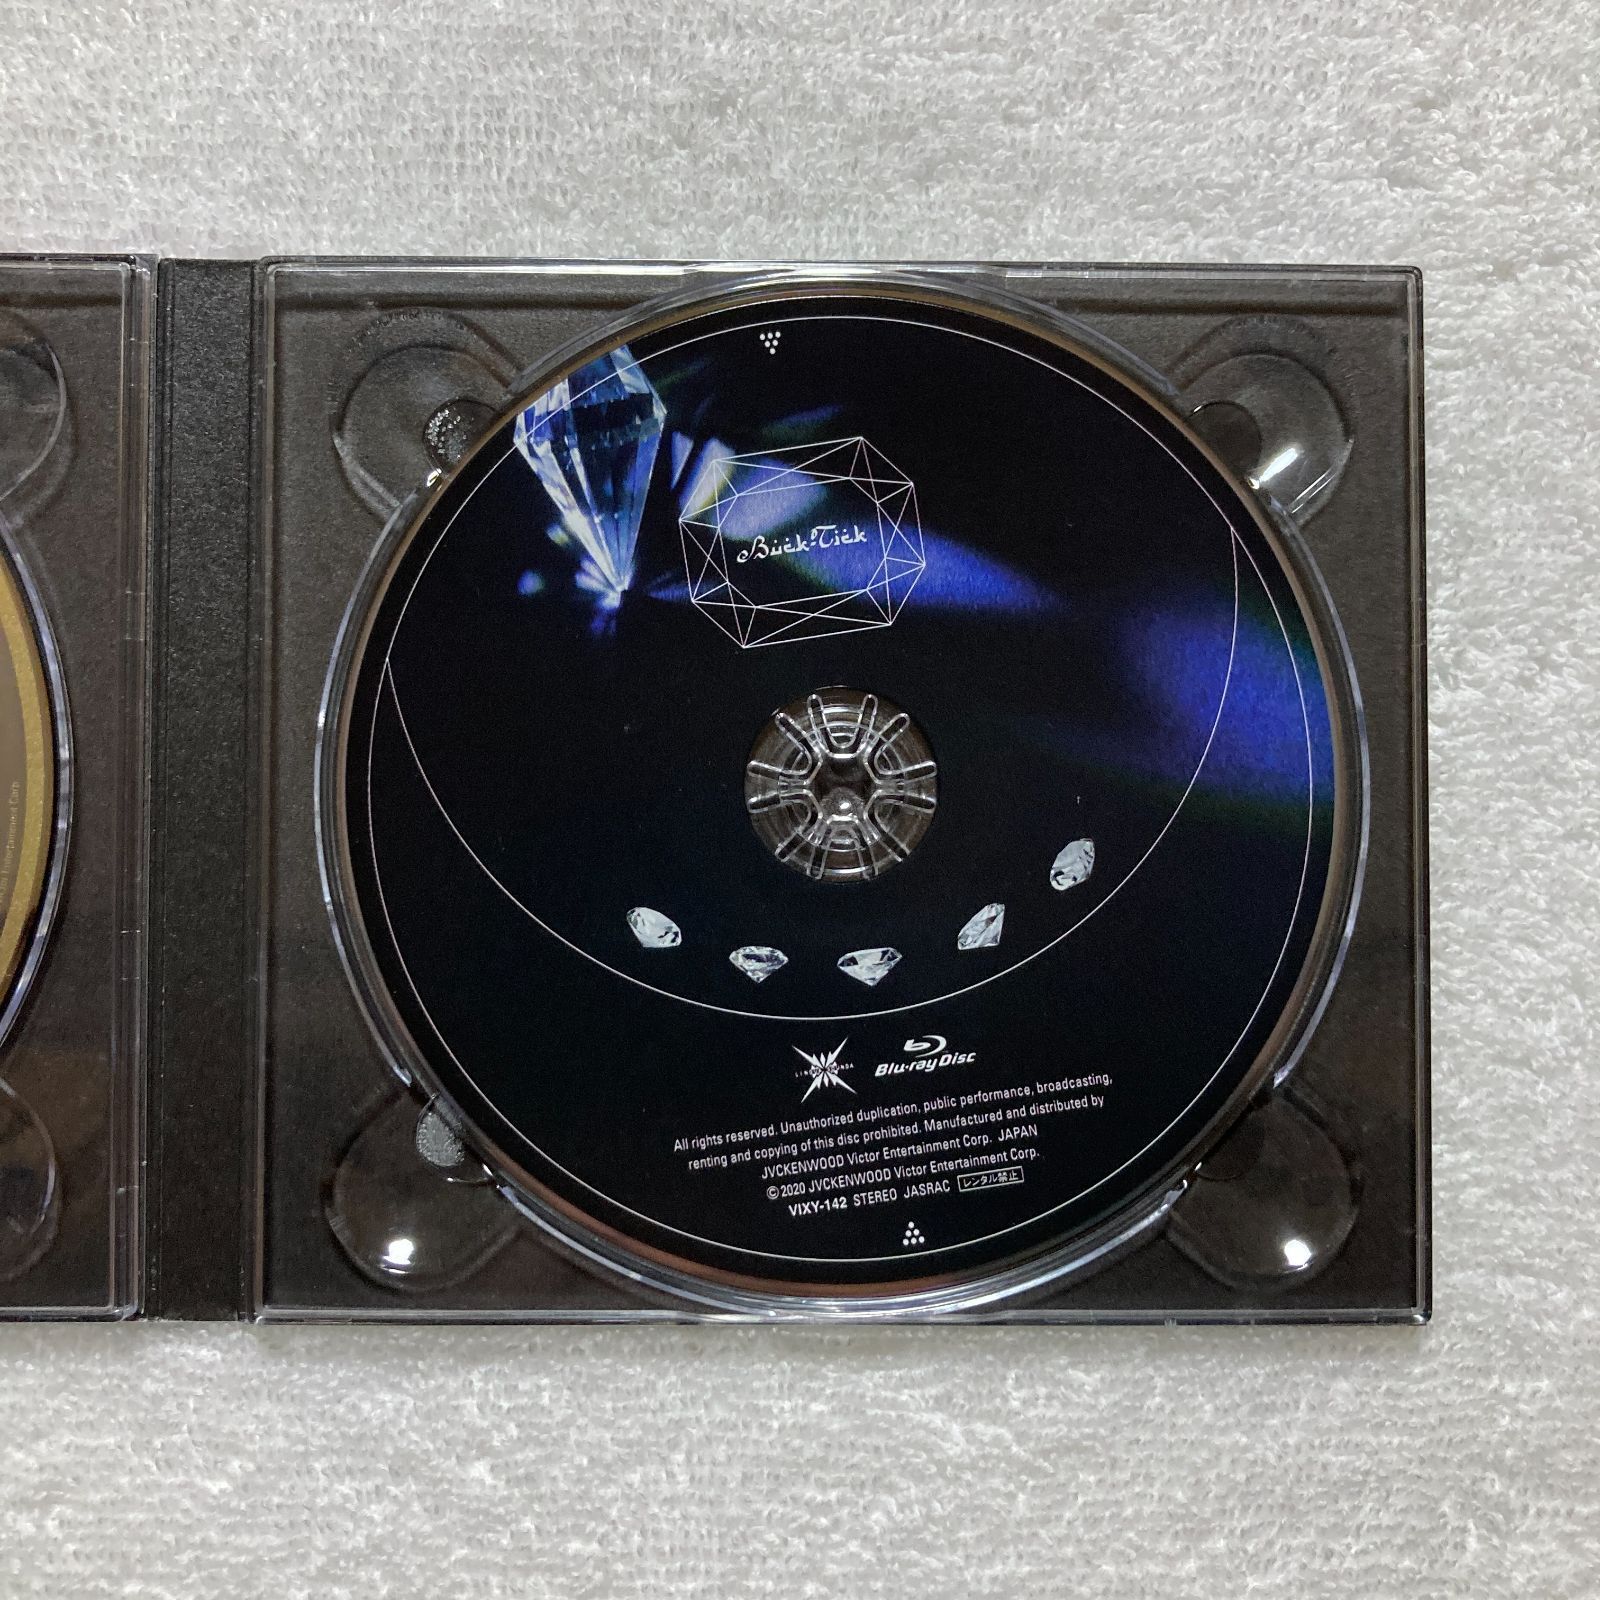 【CD】BUCK-TICK バクチク / ABRACADABRA アブラカタブラ [完全生産限定盤A] [SHM-CD + Blu-ray]